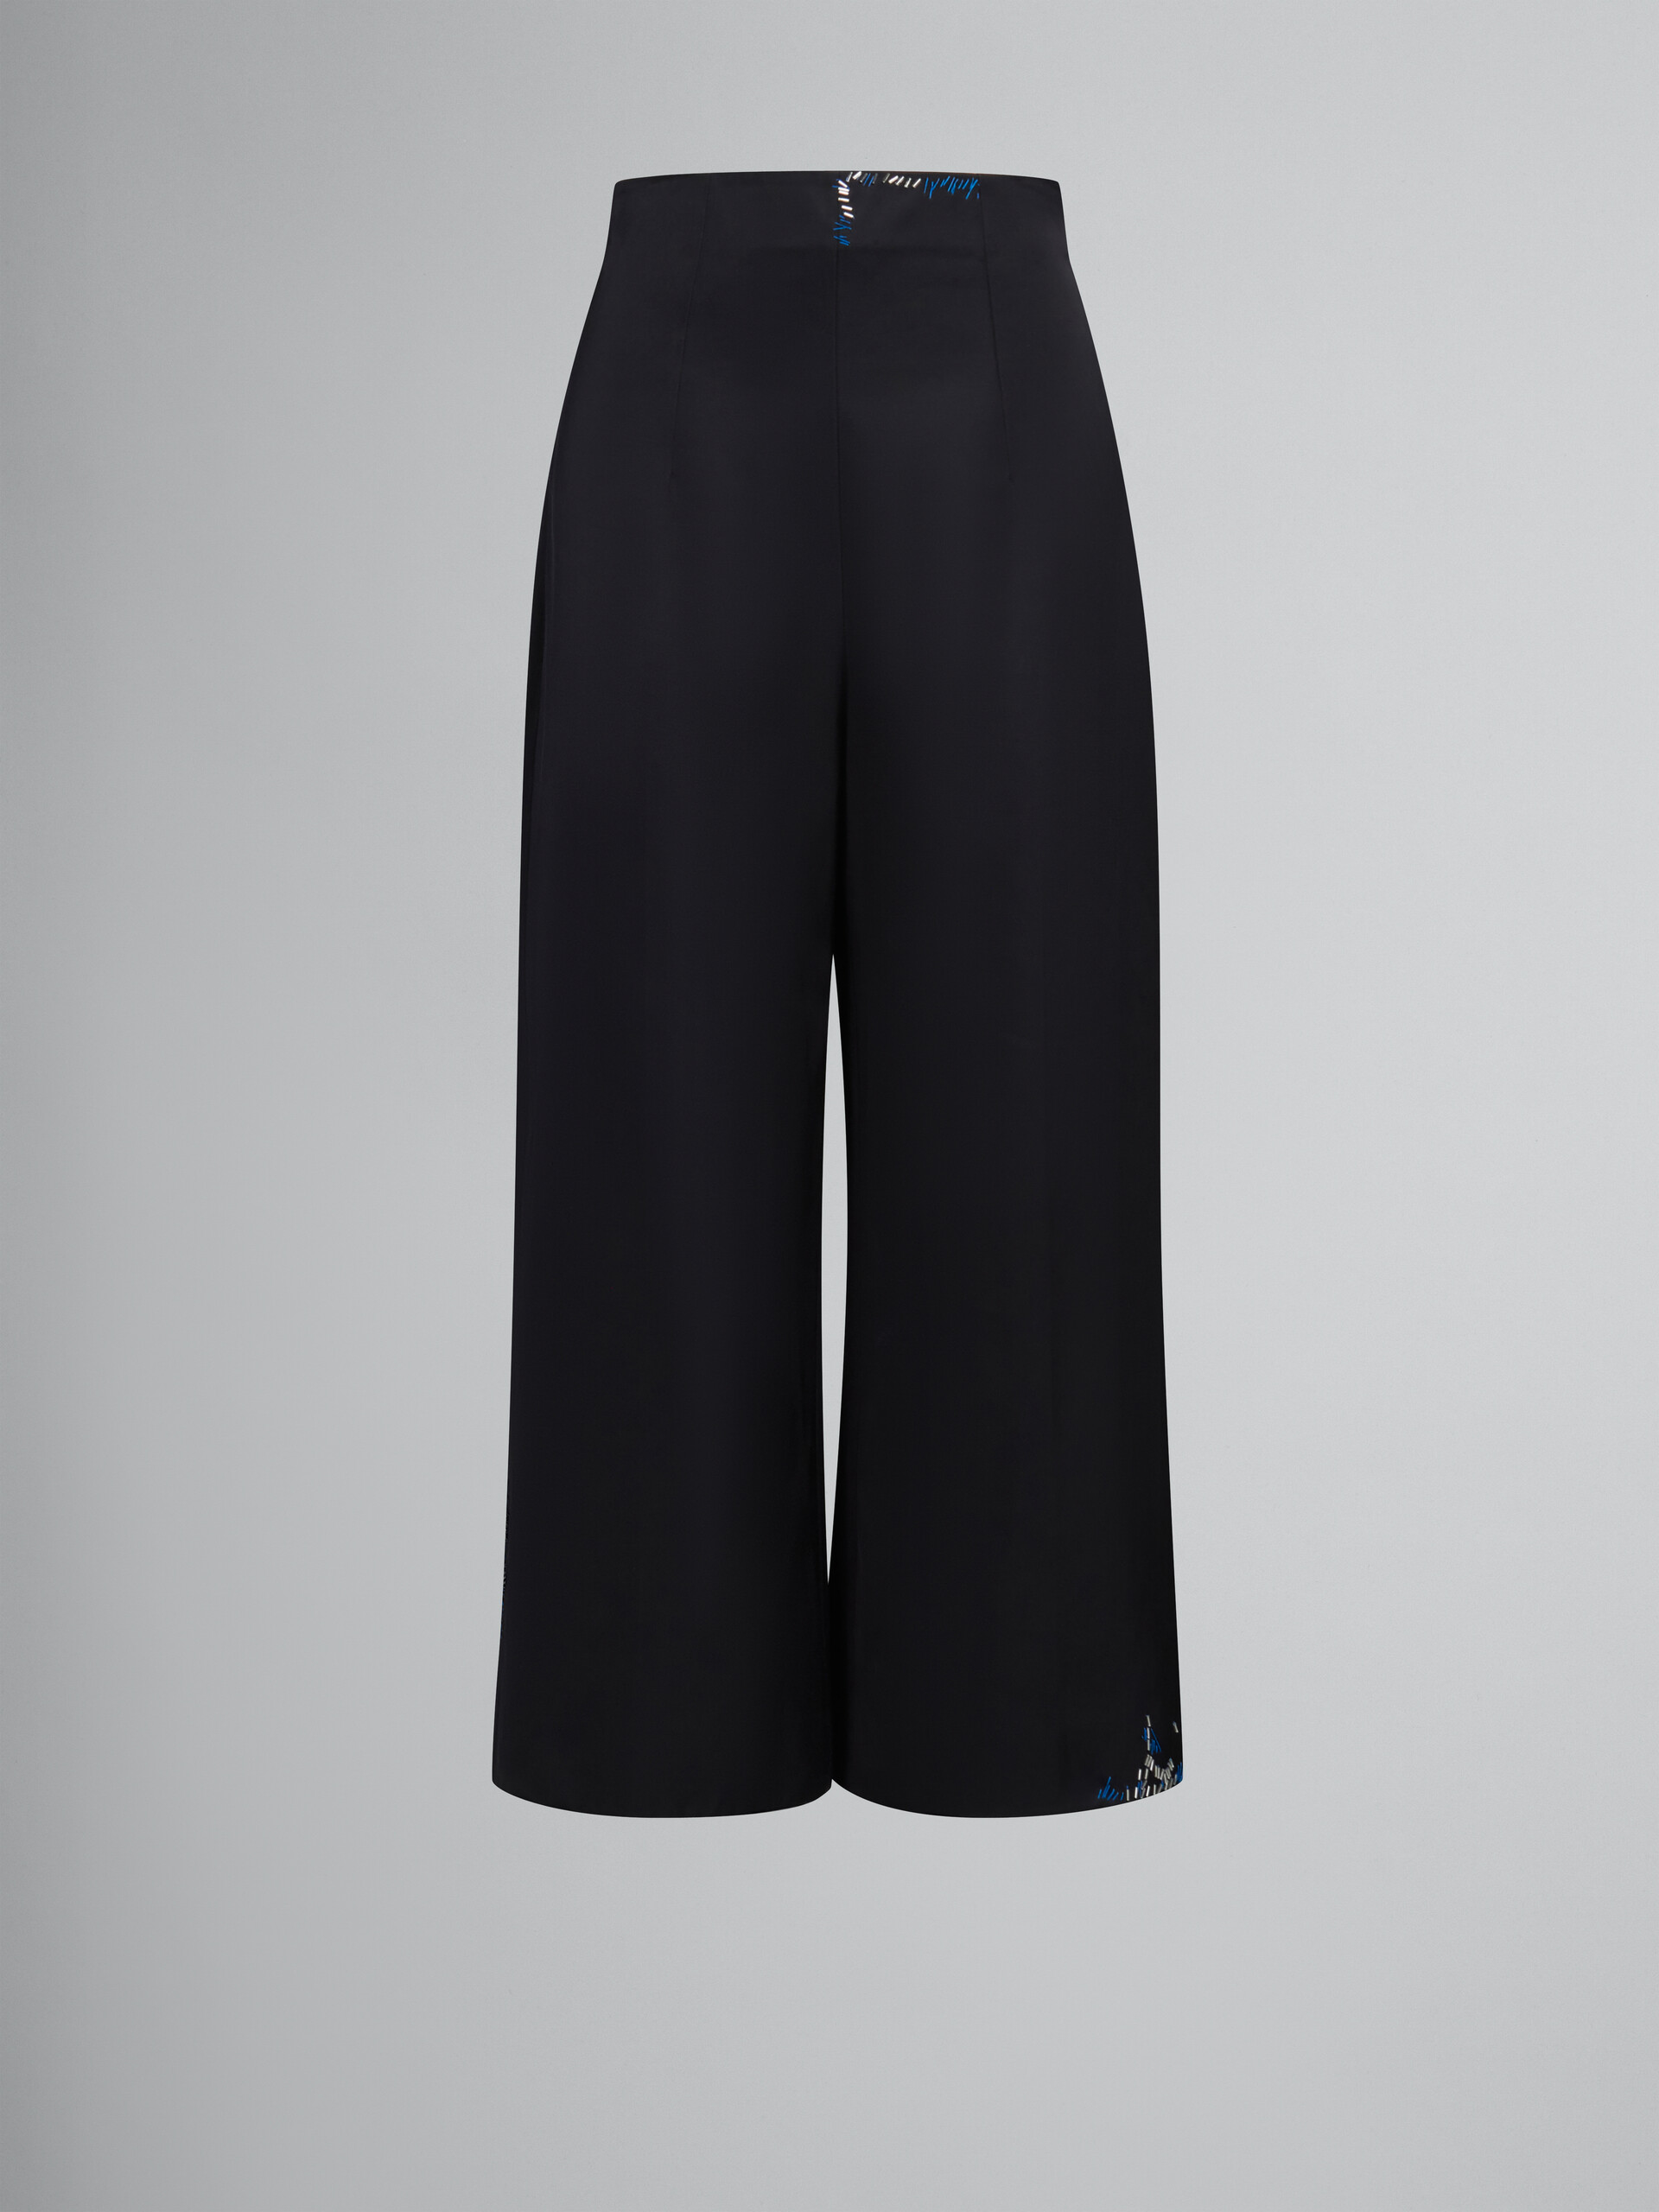 Pantaloni in raso nero con perline - Pantaloni - Image 1